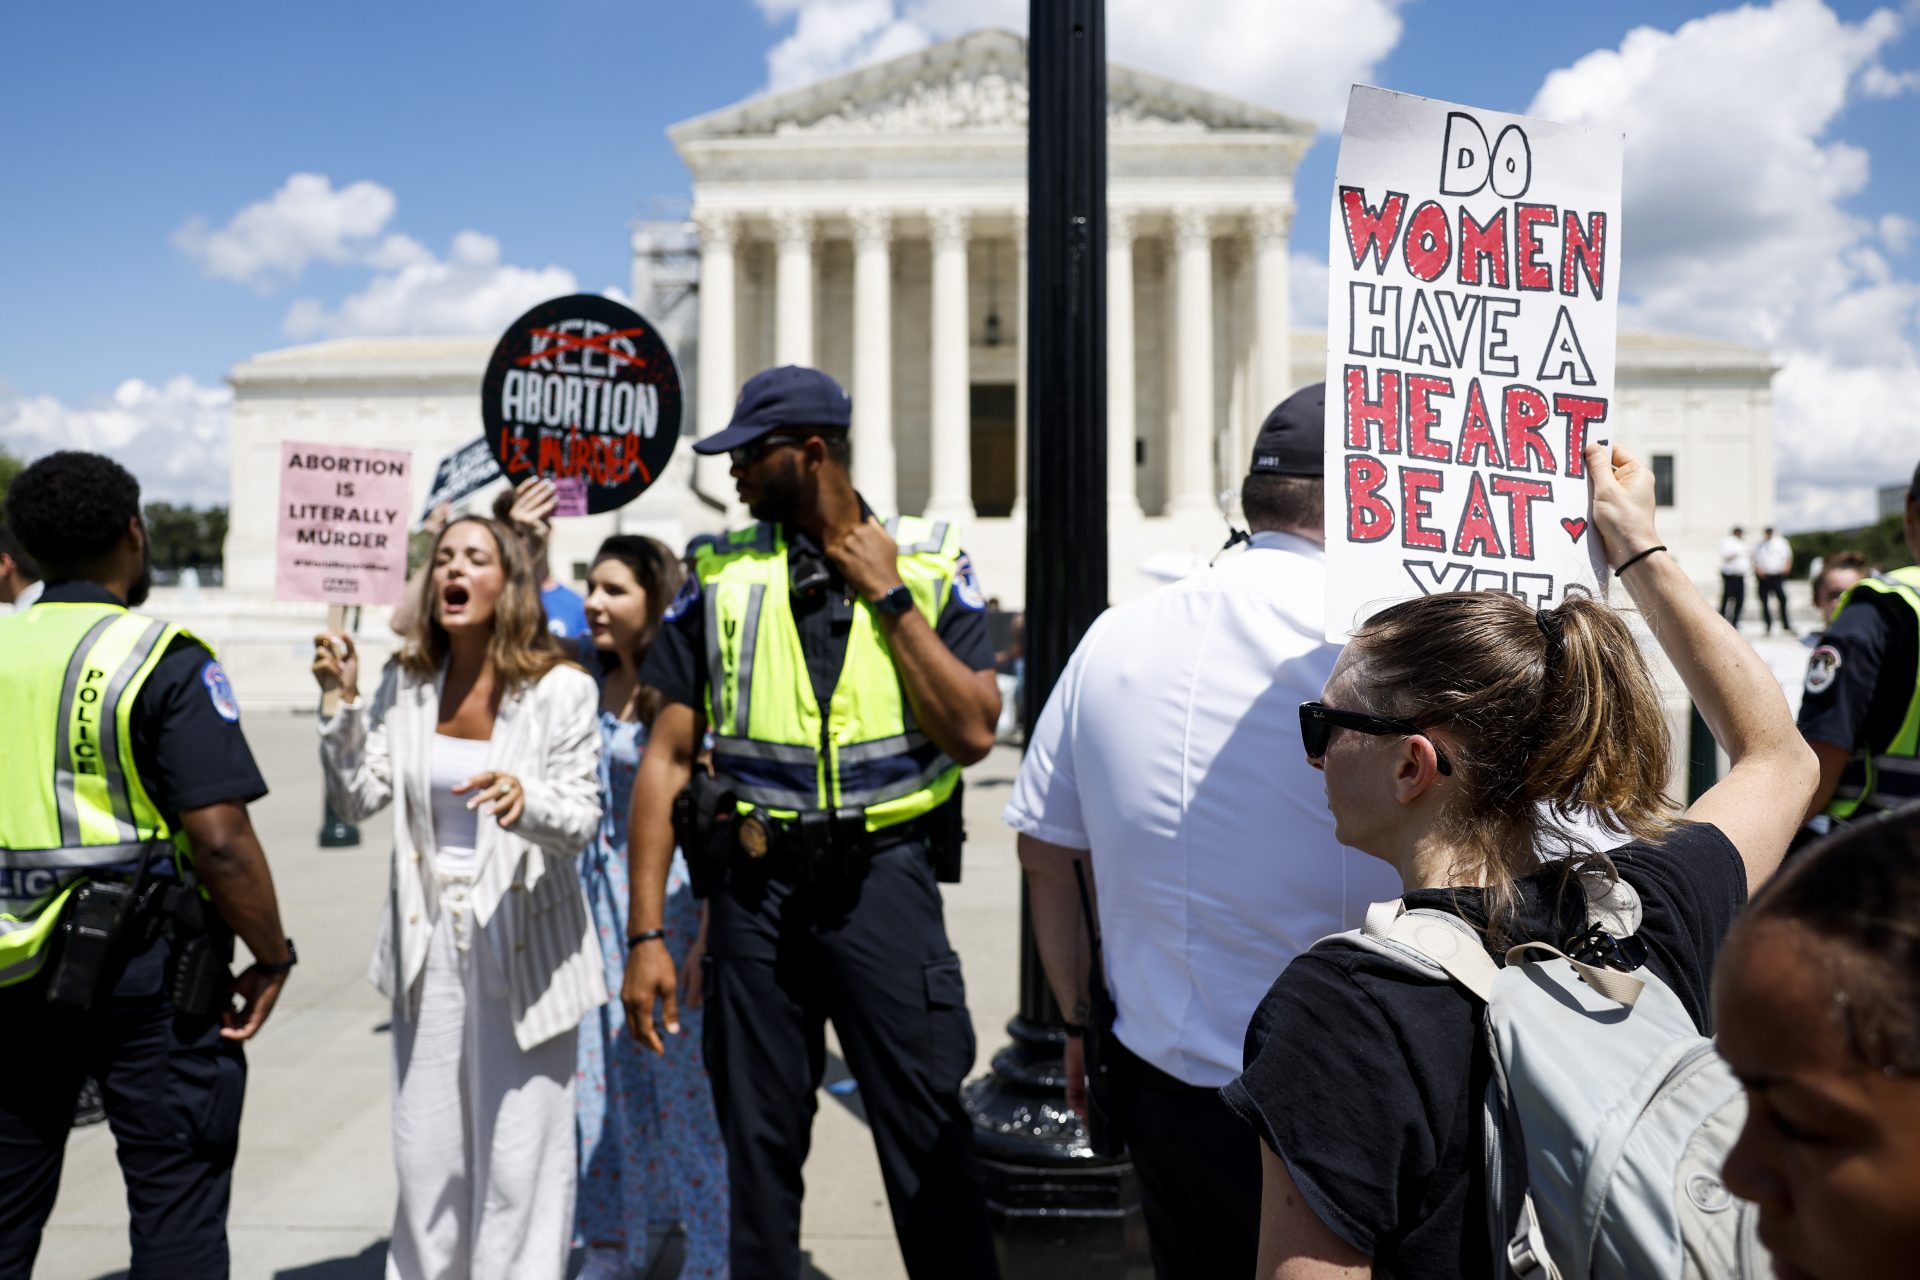 Louisiana's abortion bans could kill women: report